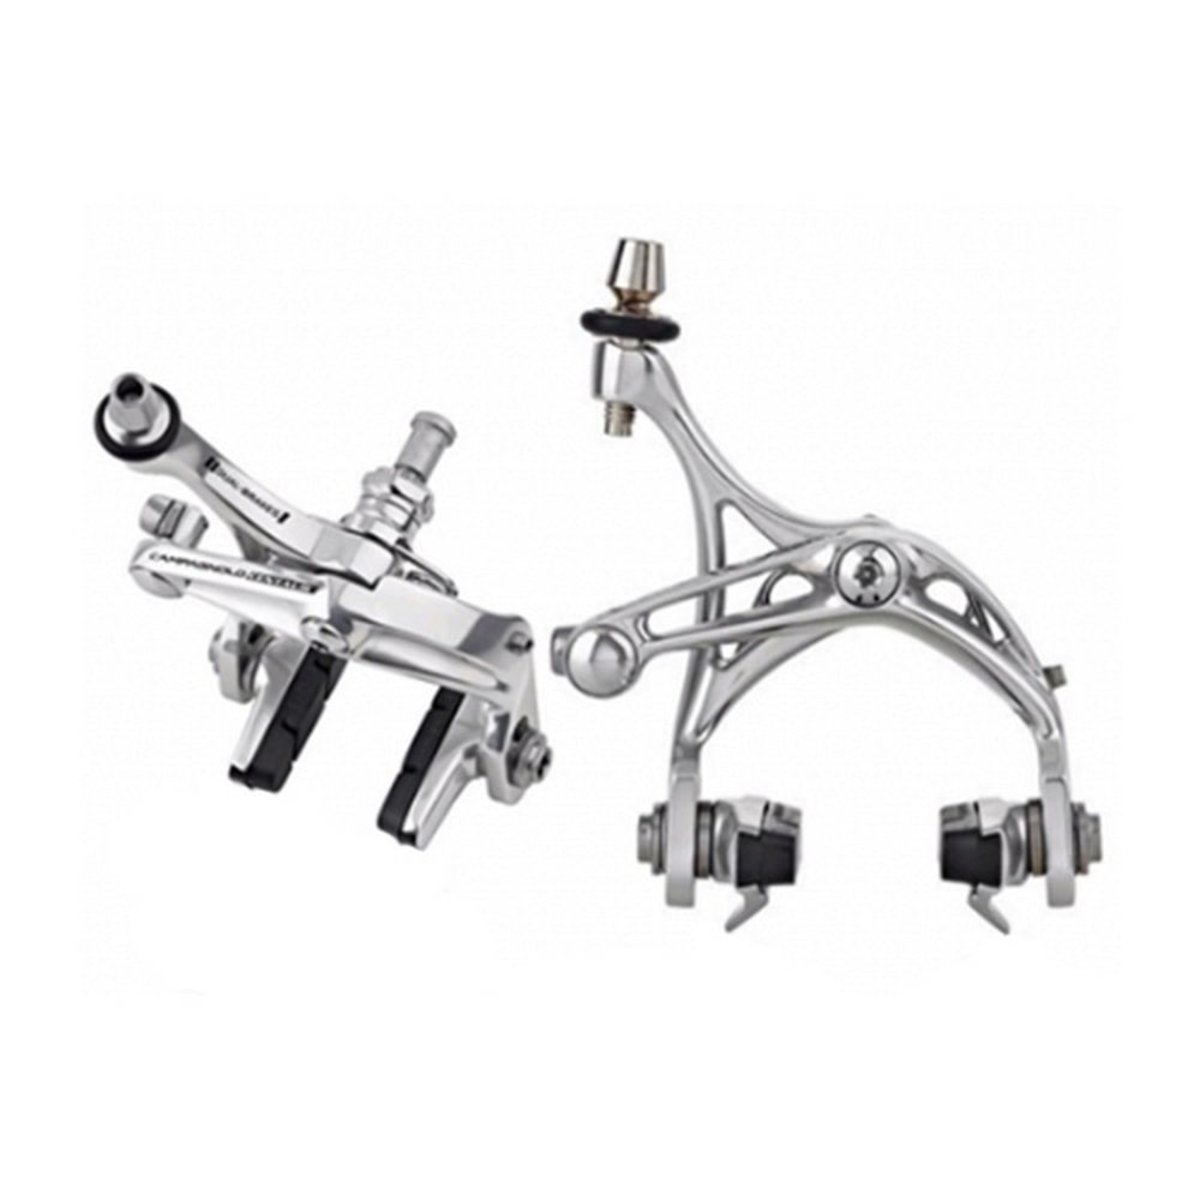 Тормоз ободной Campagnolo Centaur-D Skeleton Front/Rear Silver, V-brake, передний + задний фото 